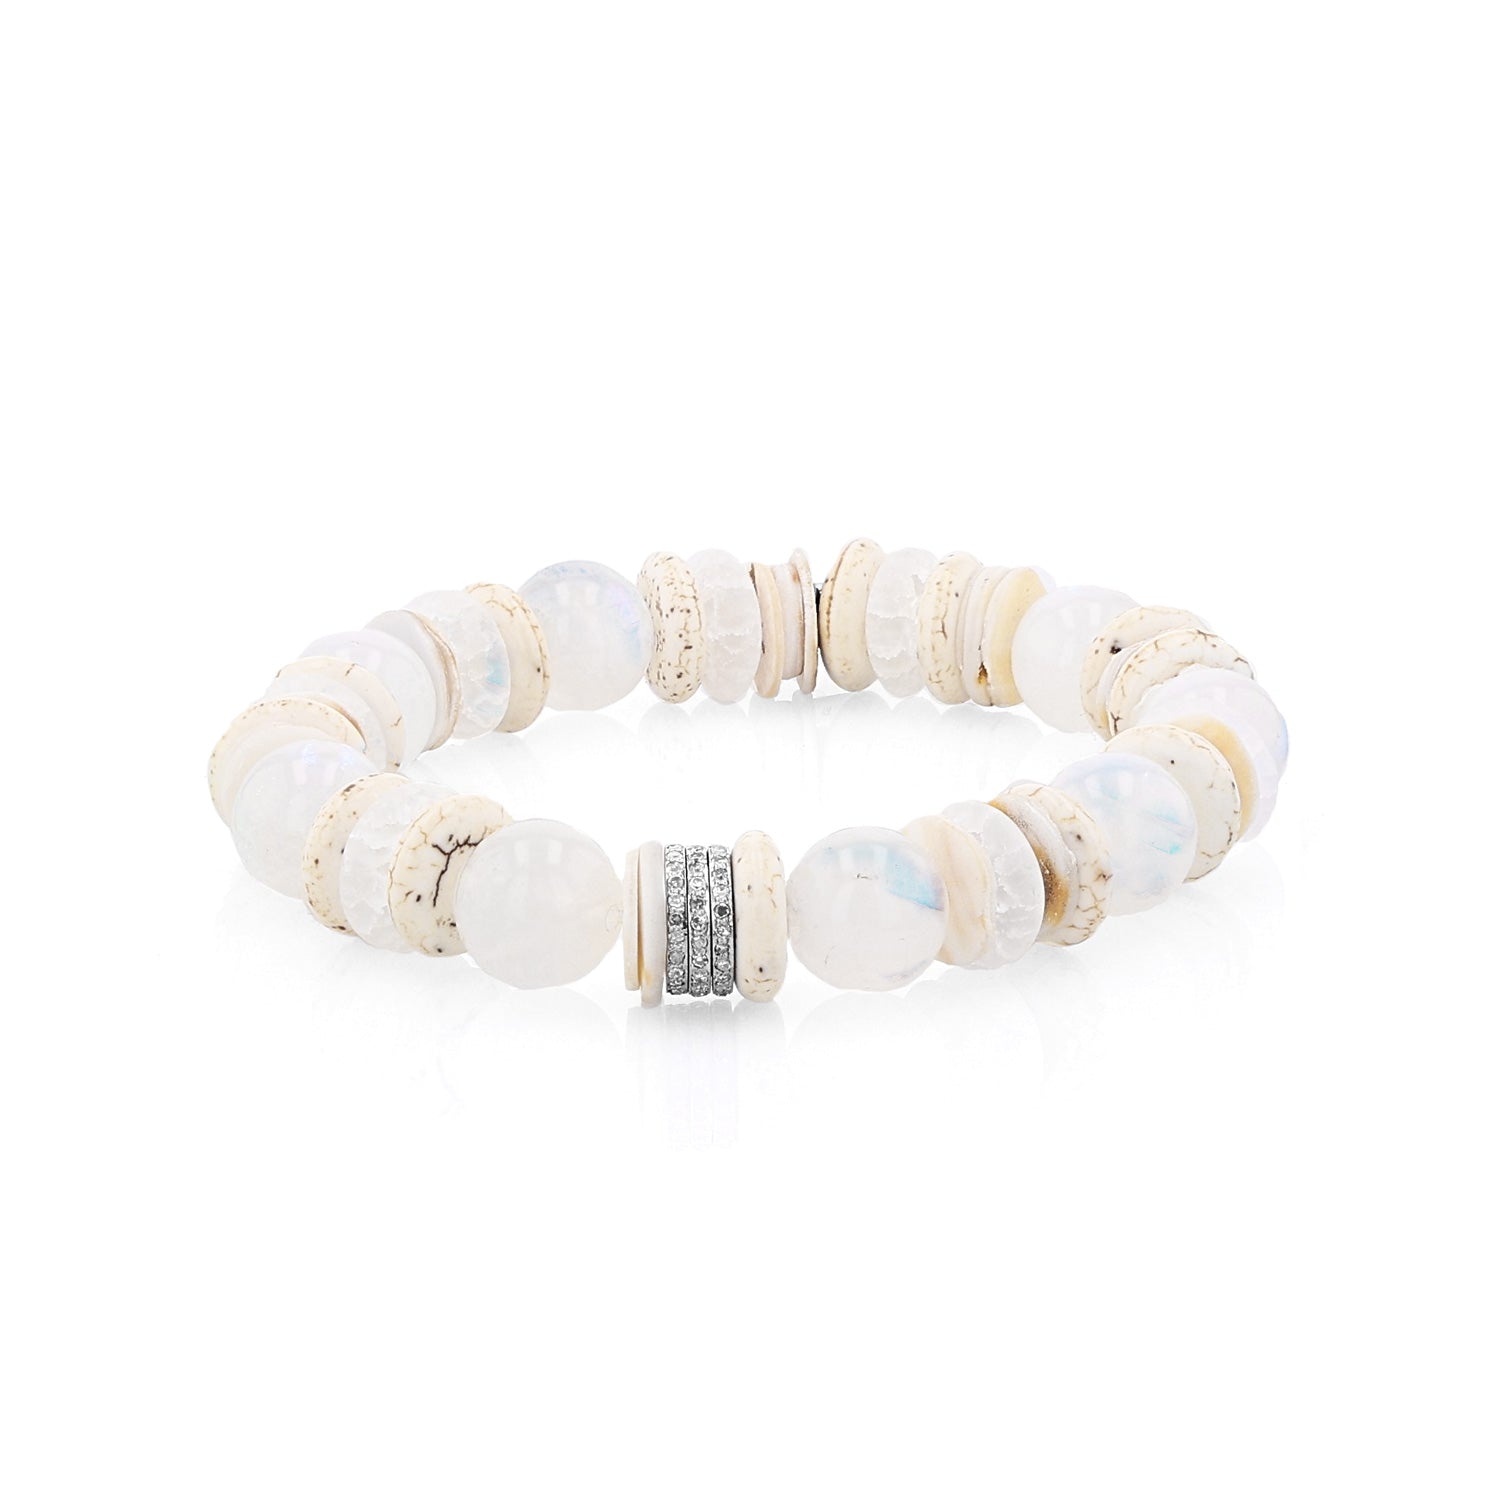 White Mix Bead Bracelet with 3 Diamond Rondelles - 10mm  B0003730 - TBird